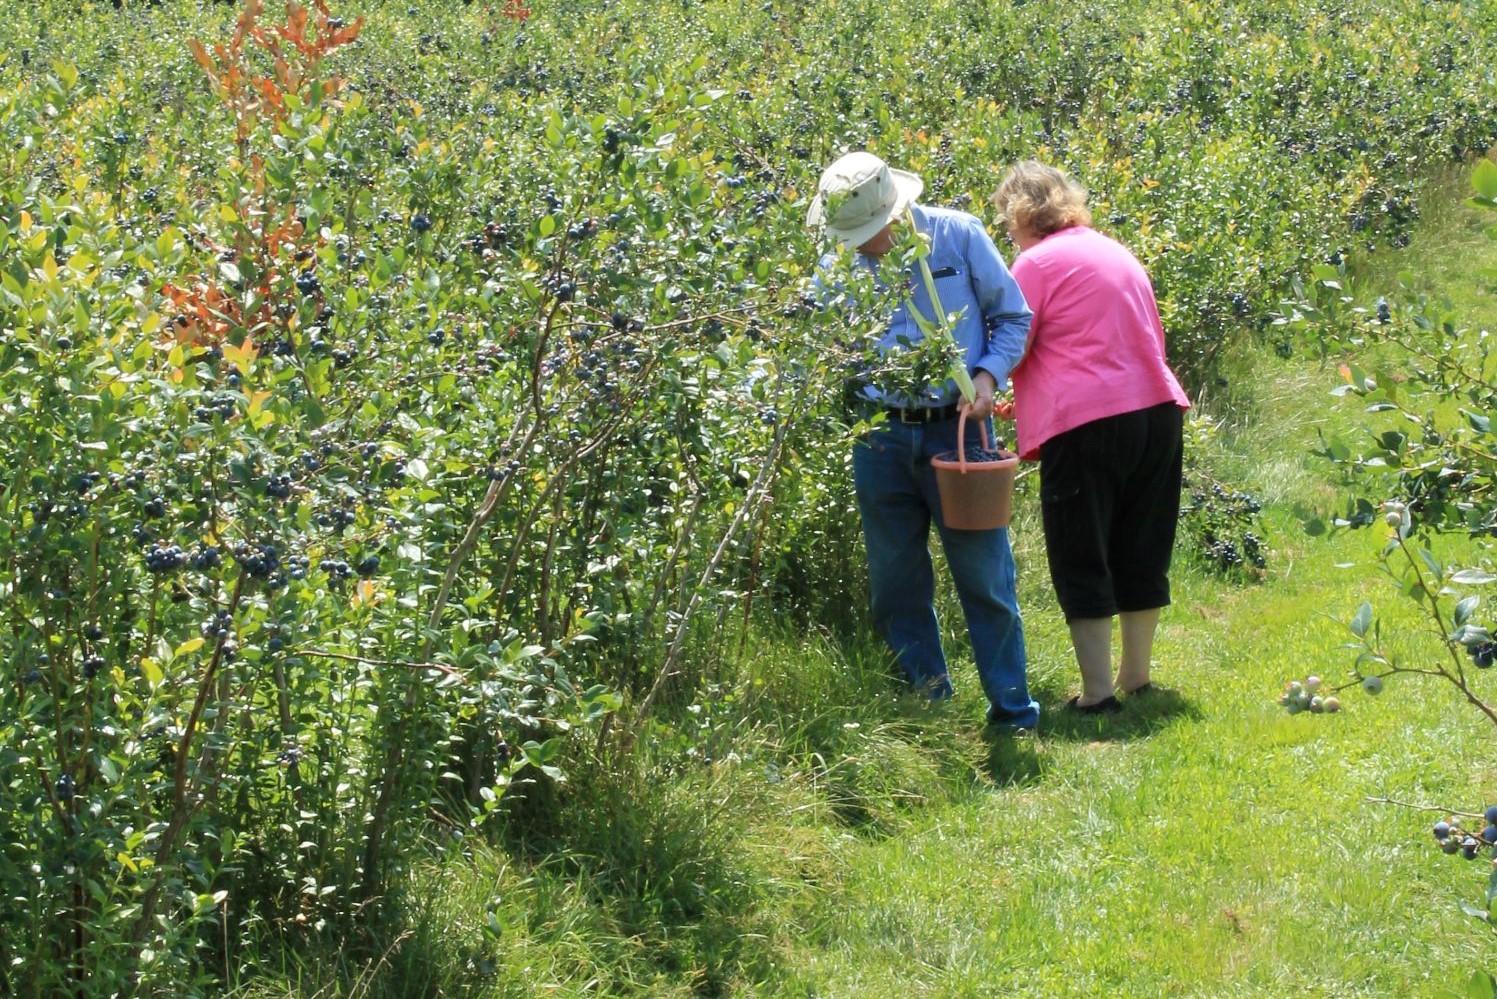 Picking blueberries at Burdick Blueberries